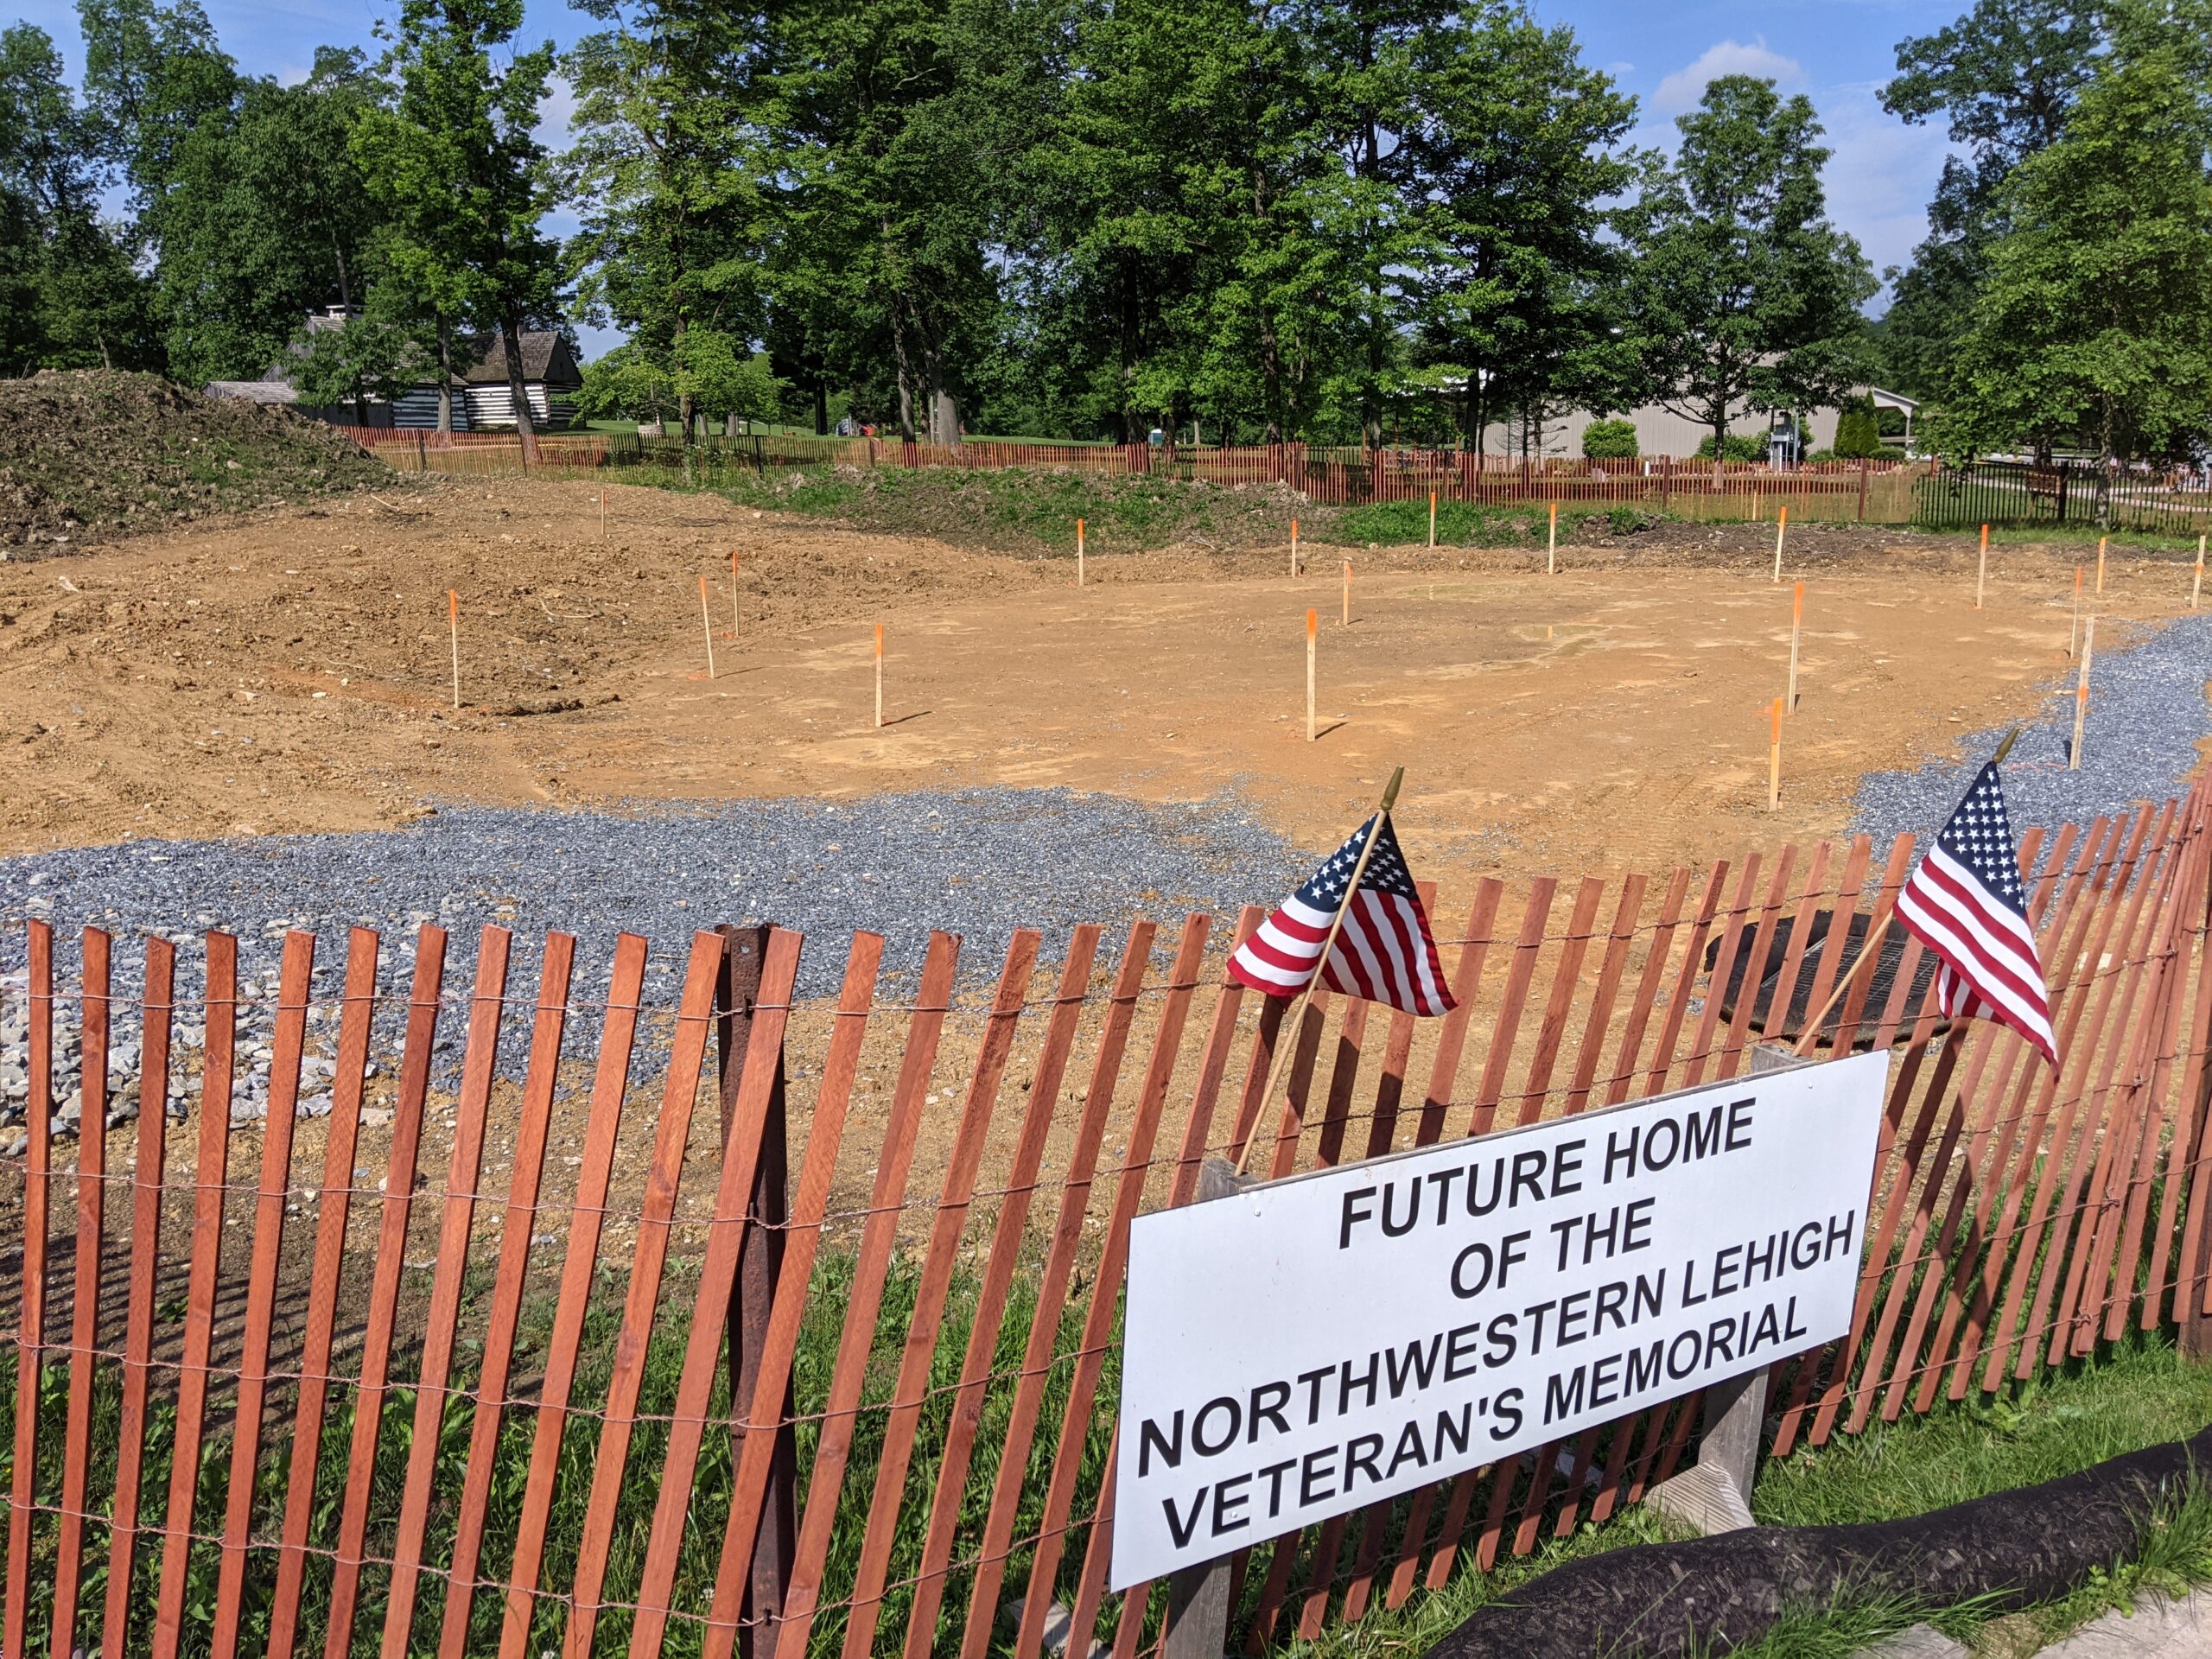 Future Home of the Nortwestern Lehigh Veteran's Memorial